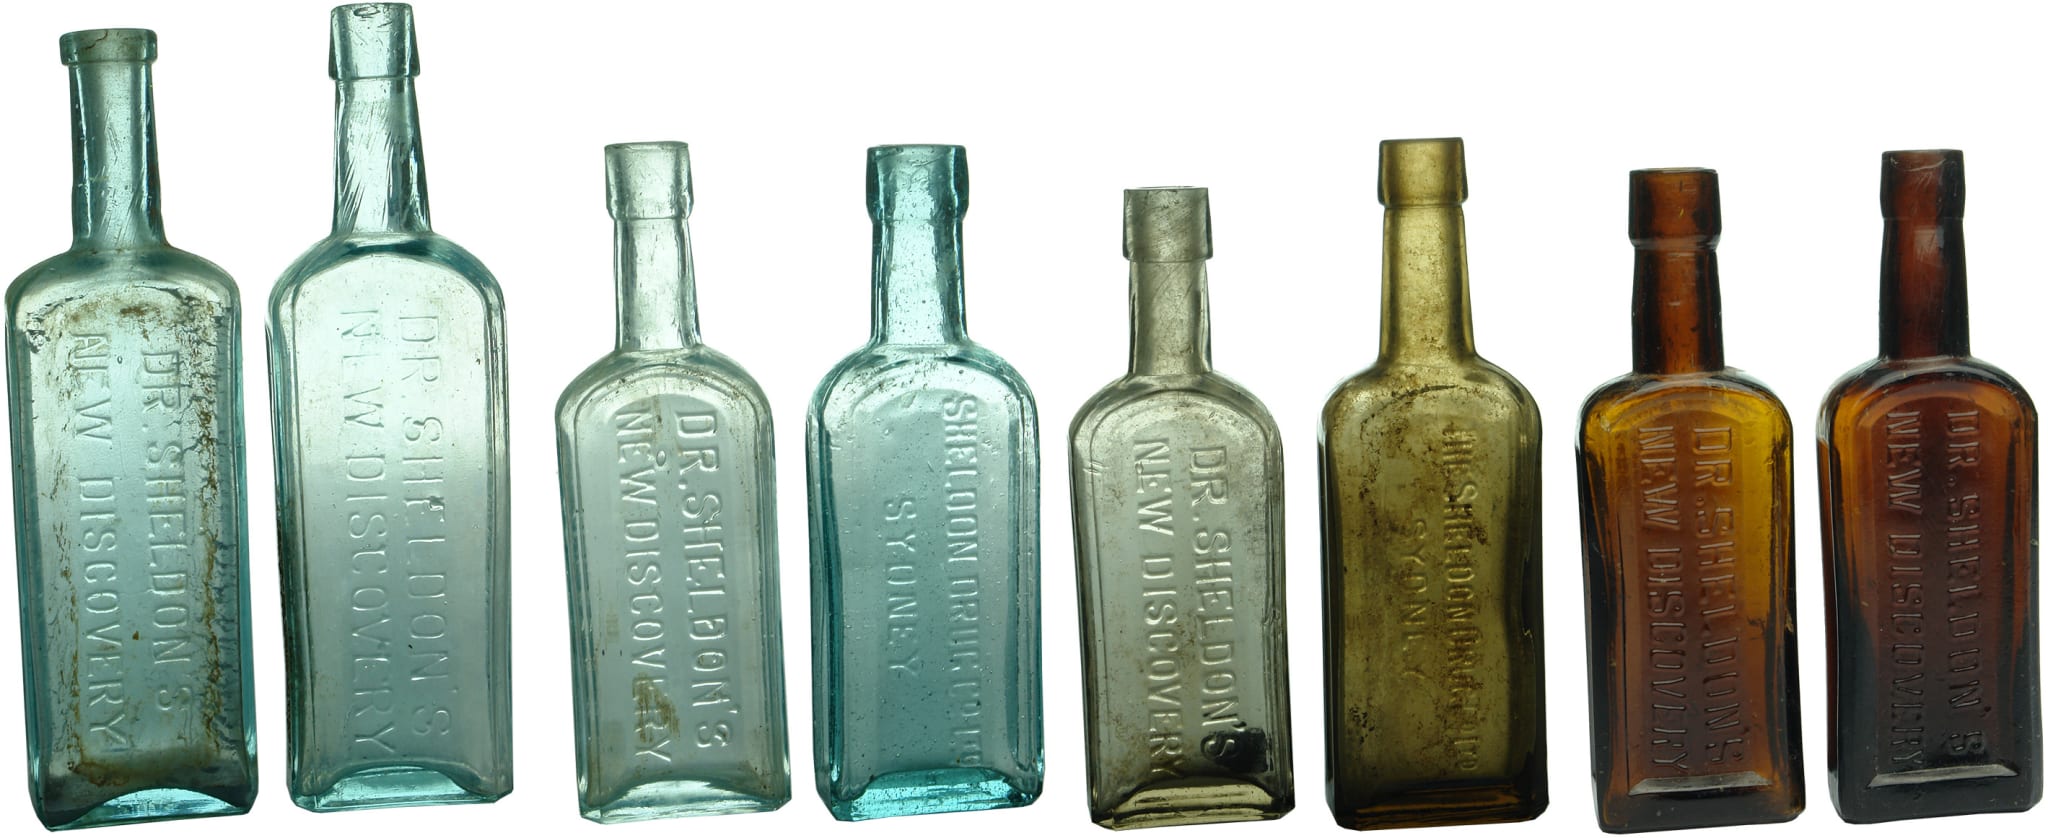 Antique Sheldon's New Discovery Bottles